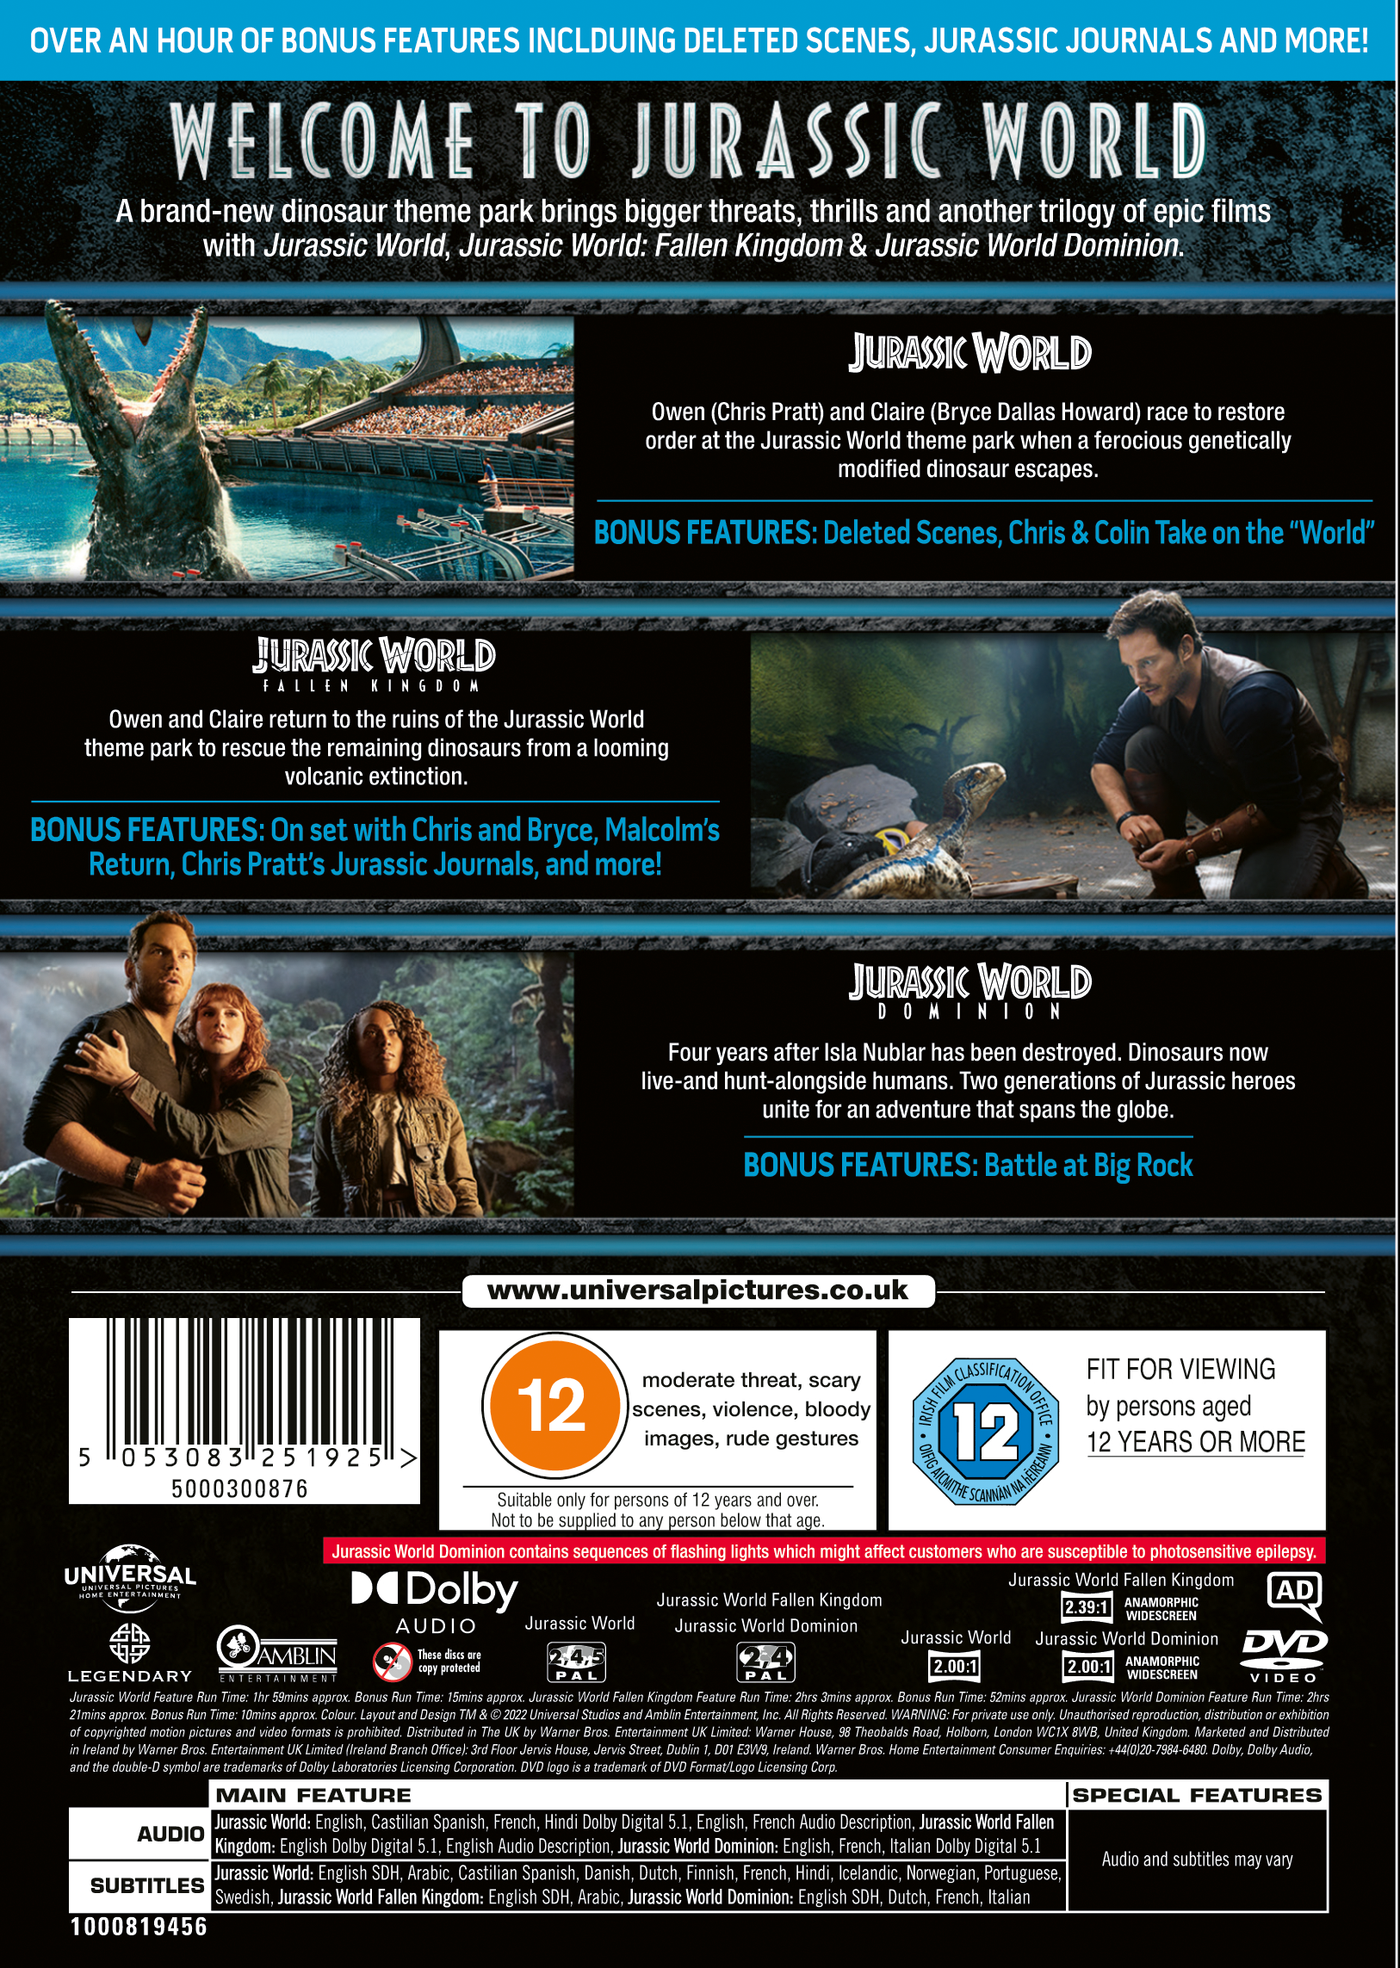 Jurassic World Trilogy (DVD) (2022)